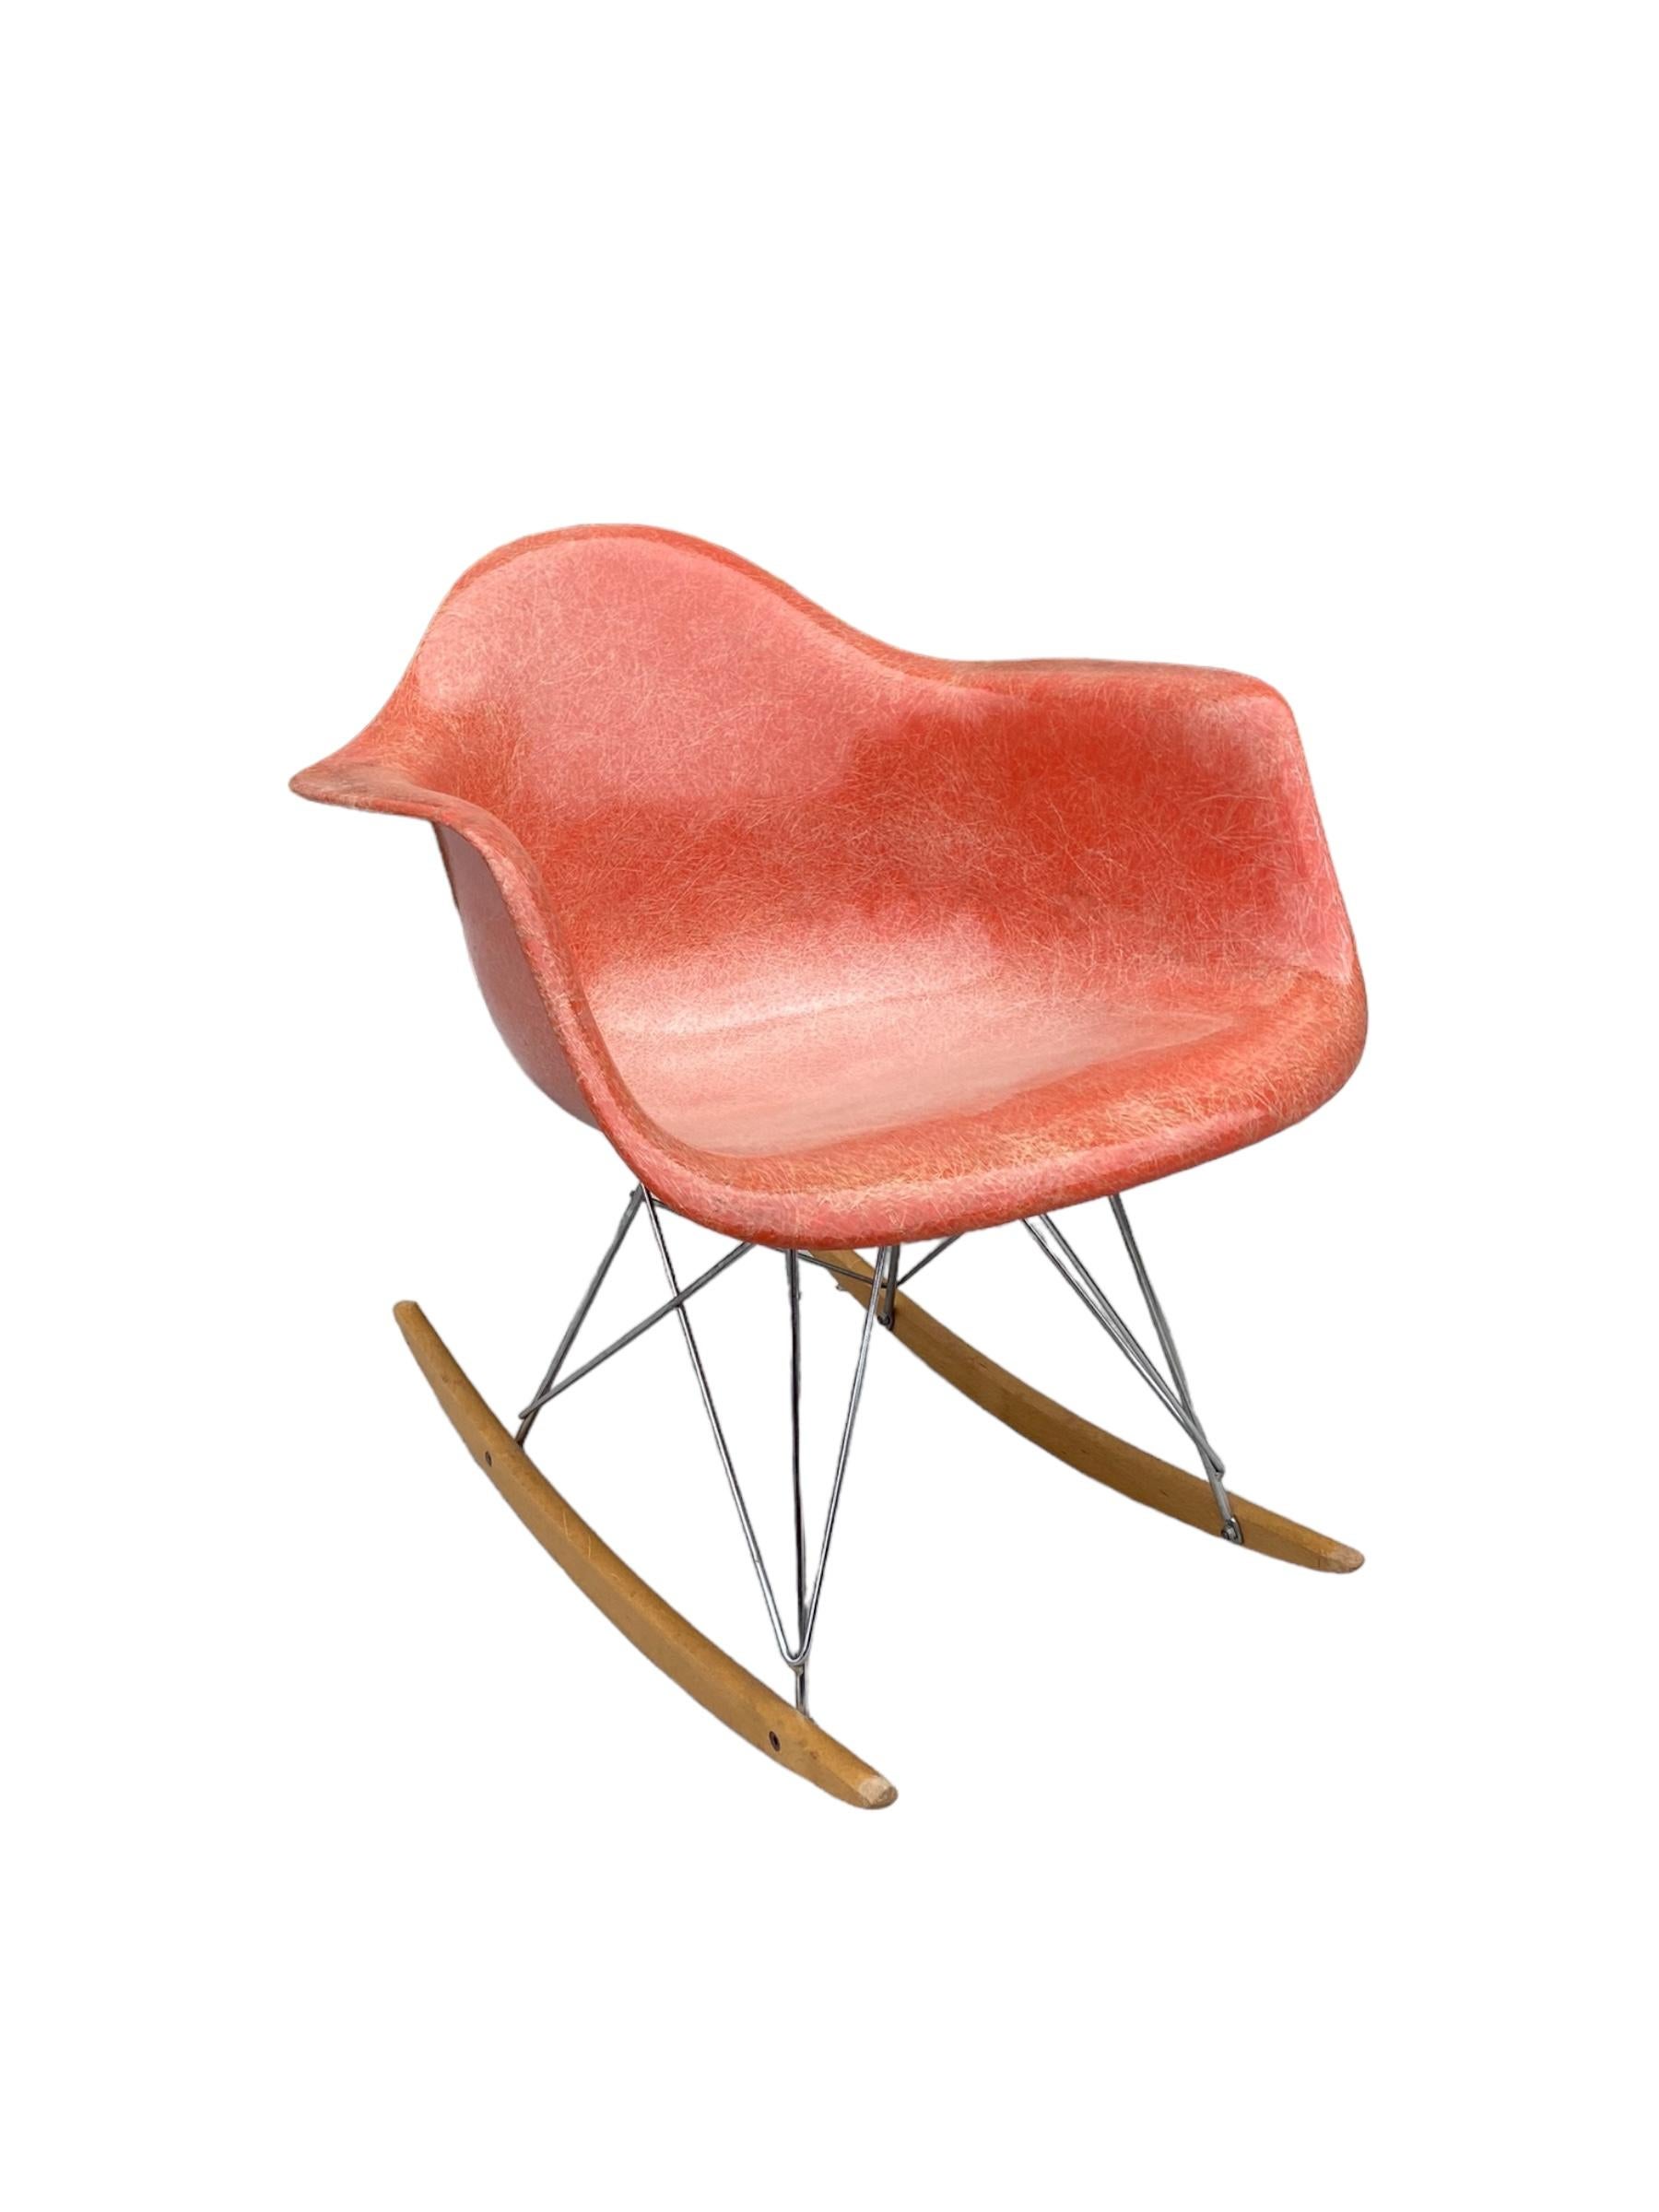 Herman Miller Eames RAR Rocking Chair in Red Orange For Sale 3